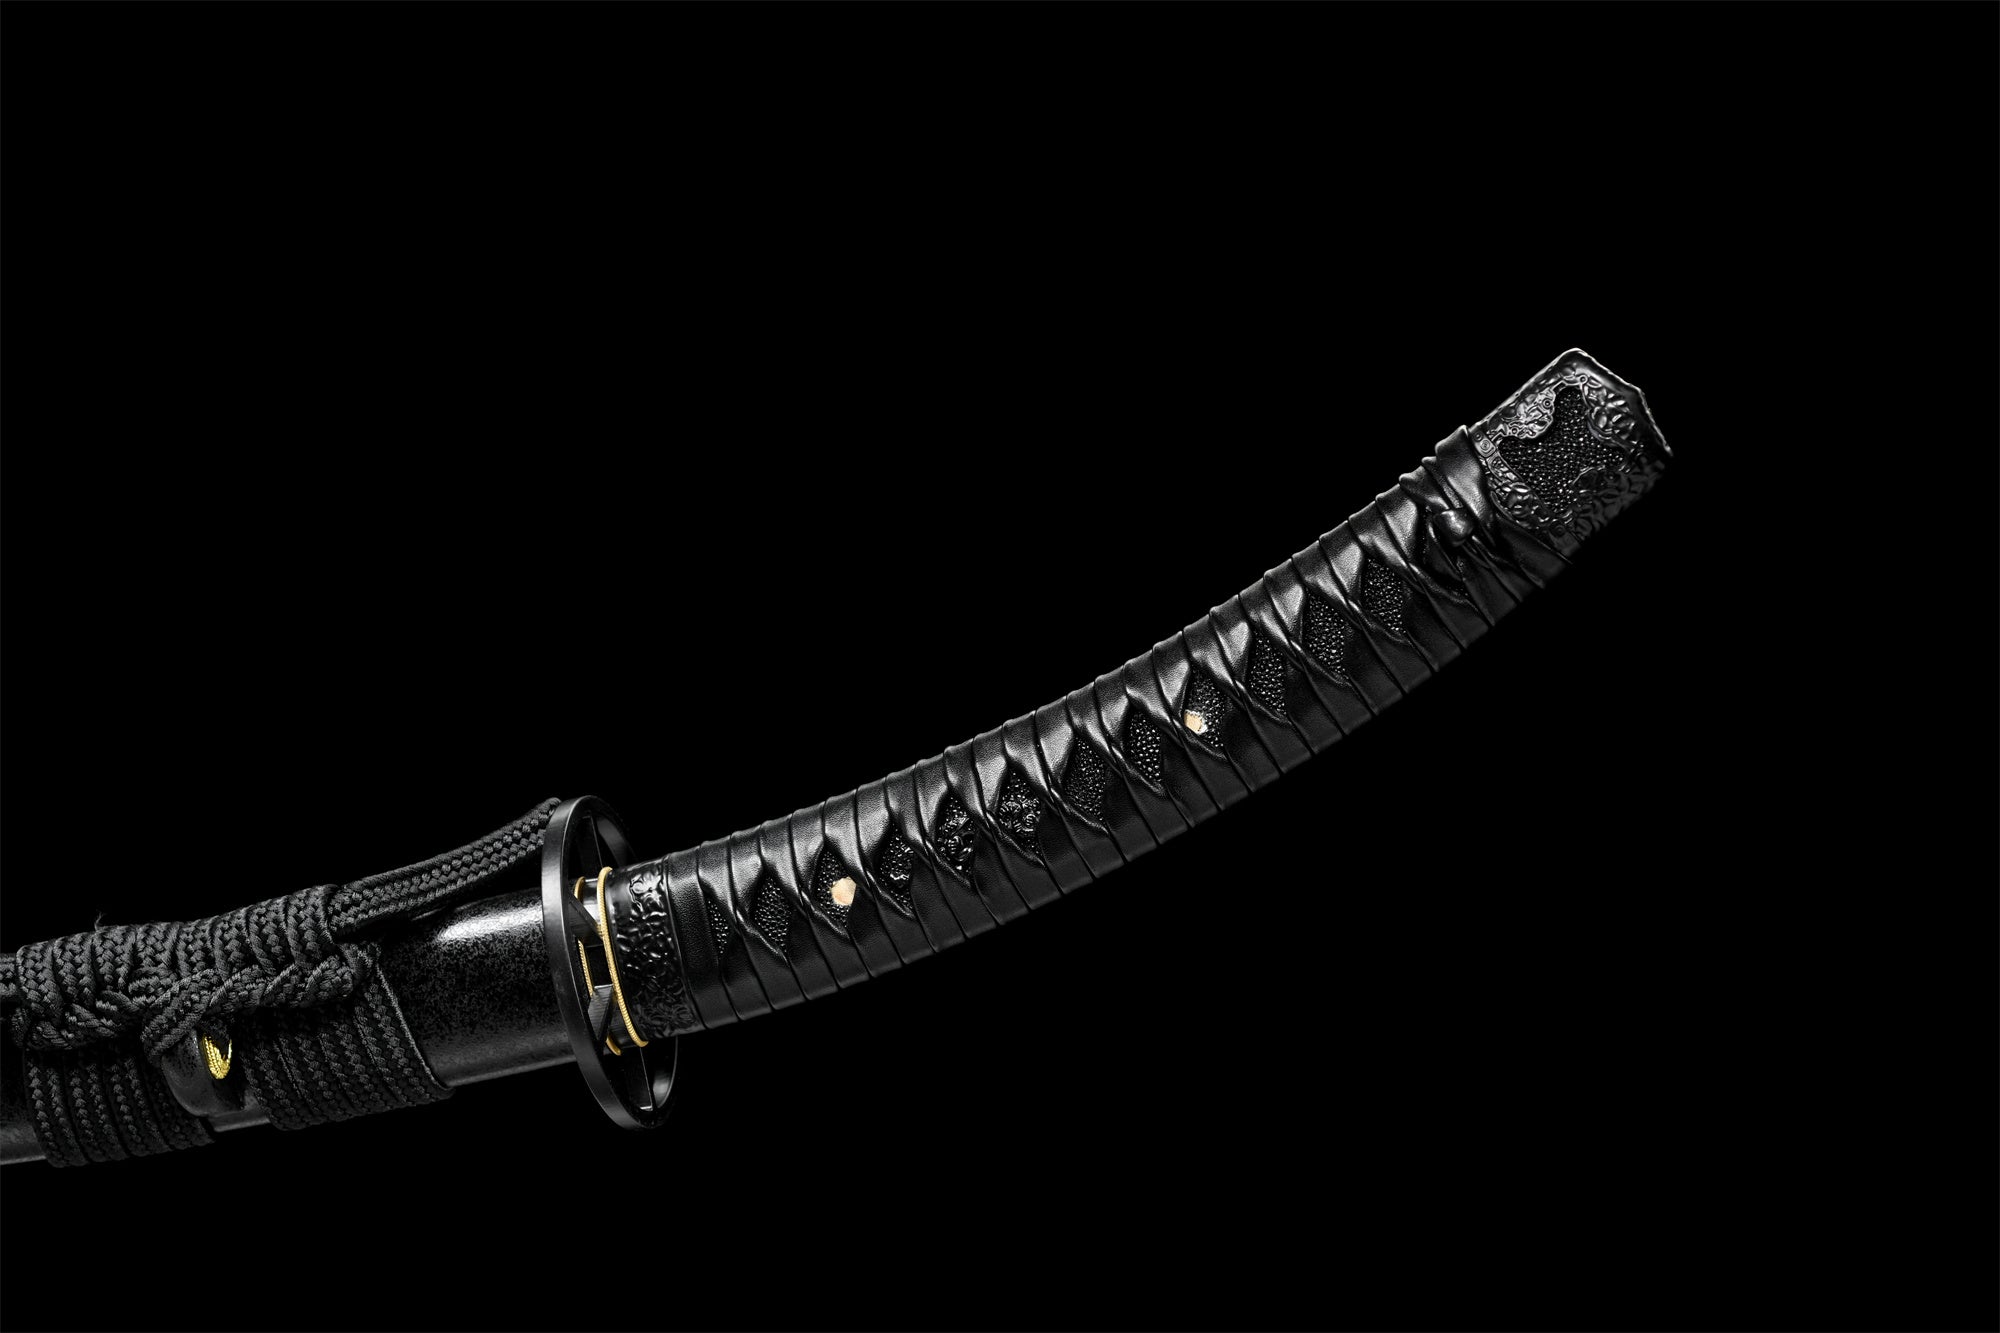 Rurouni Kenshin Katana Sword,Curved Handle Japanese Samurai Sword,Real Handmade Katana,Clay tempered t-10 steel with hamon